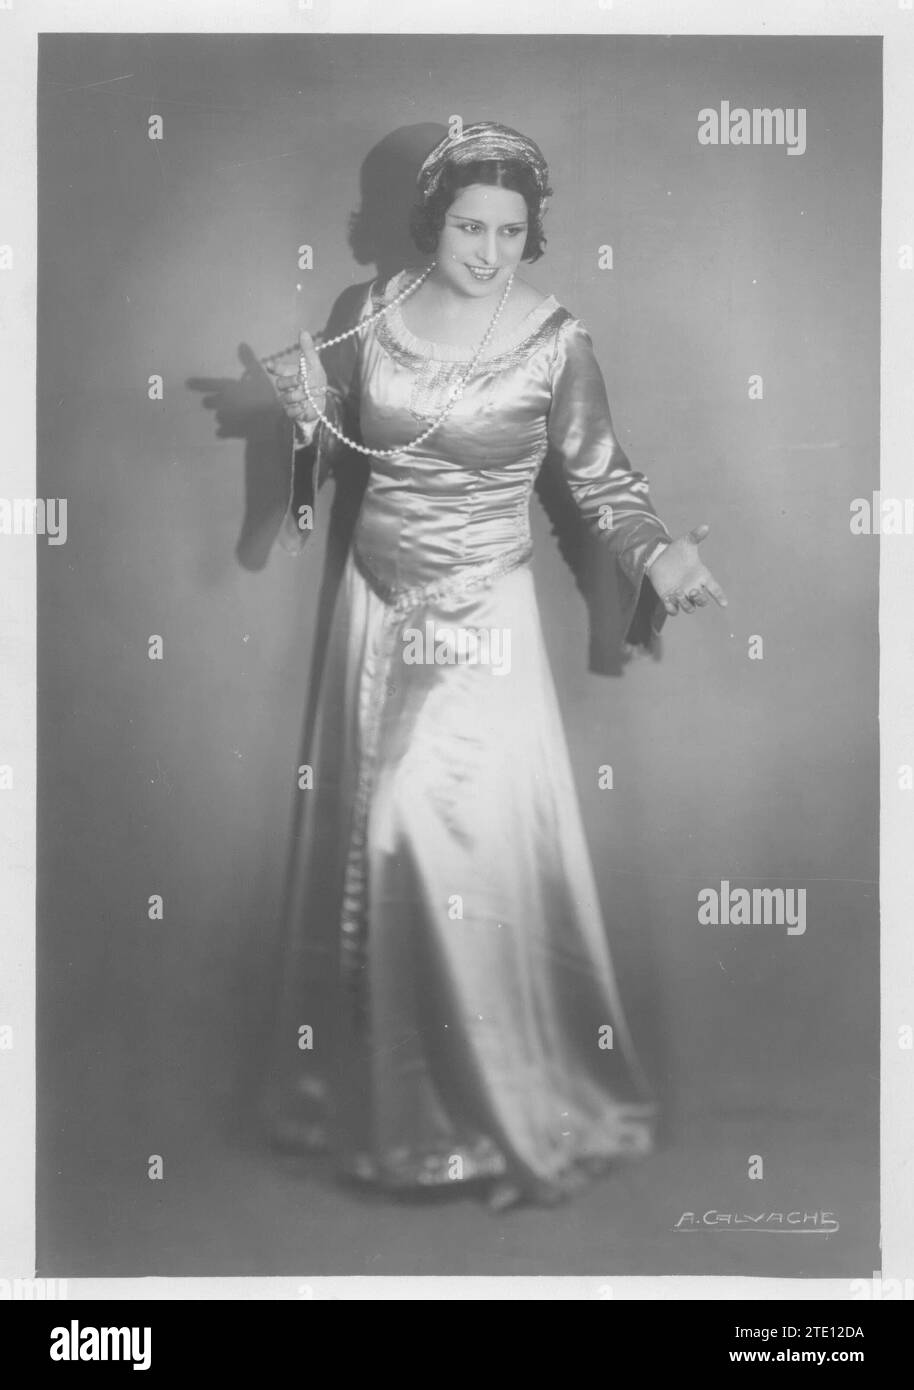 12/31/1931. In the Image, the actress Pepita Díaz Artigas Characterized for a theatrical performance. Credit: Album / Archivo ABC / Antonio Calvache Stock Photo